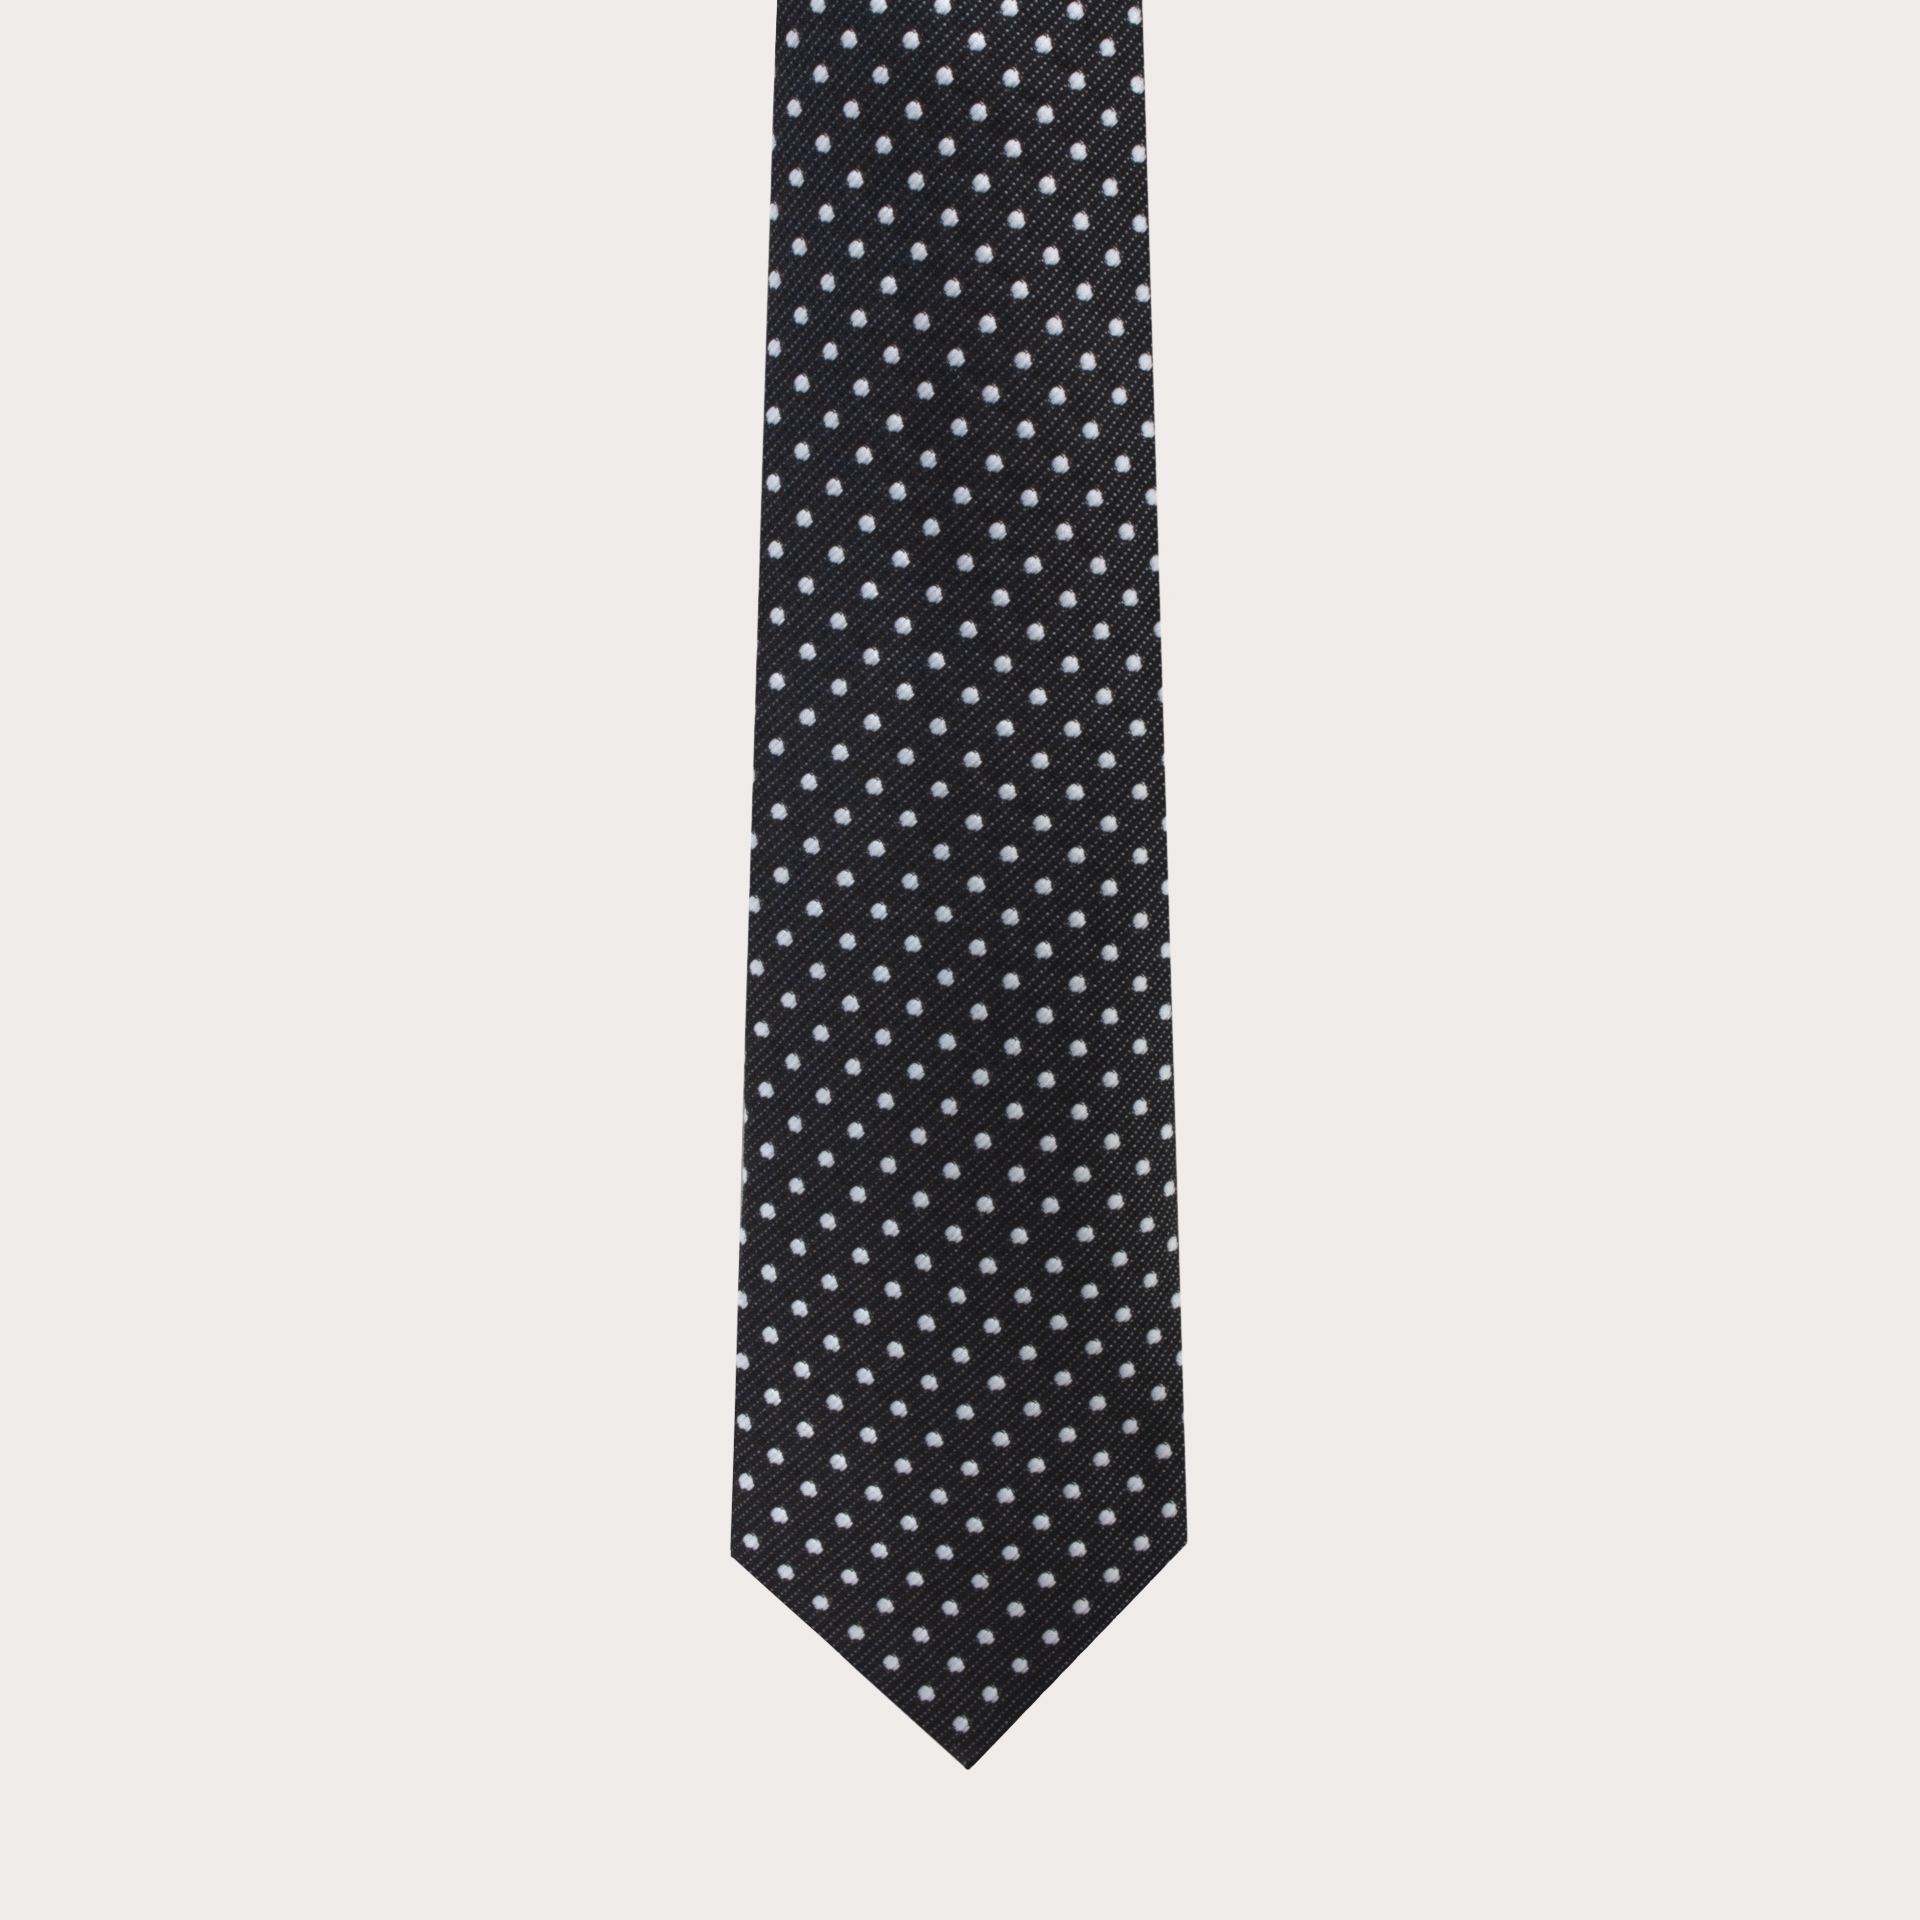 BRUCLE silk necktie made in italy pois black